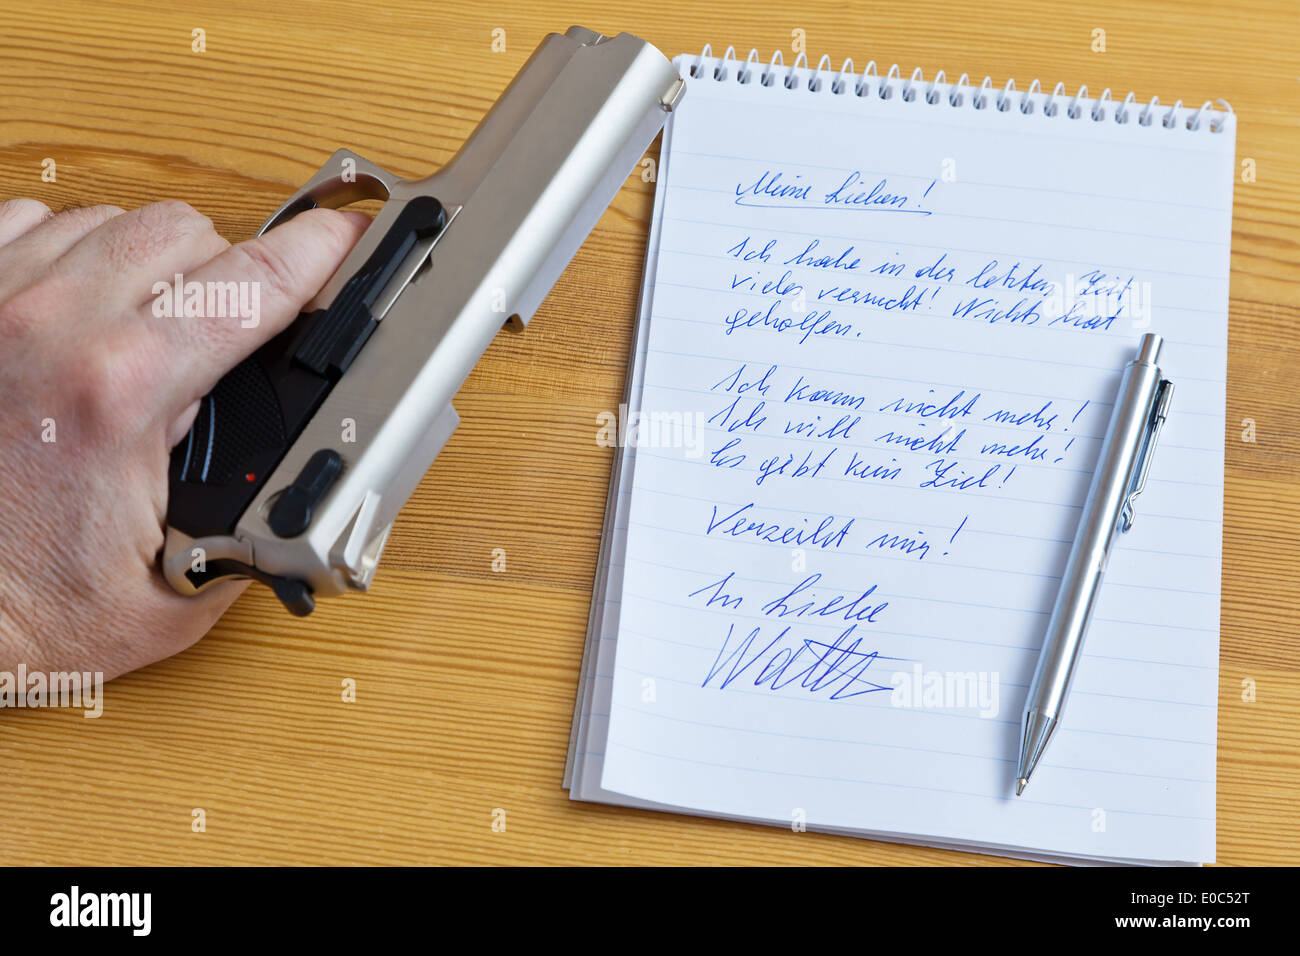 Una lettera di dimissioni e la pistola di un selfmurderer., Ein Abschieds breve und die Pistole eines Selbstmoerders. Foto Stock